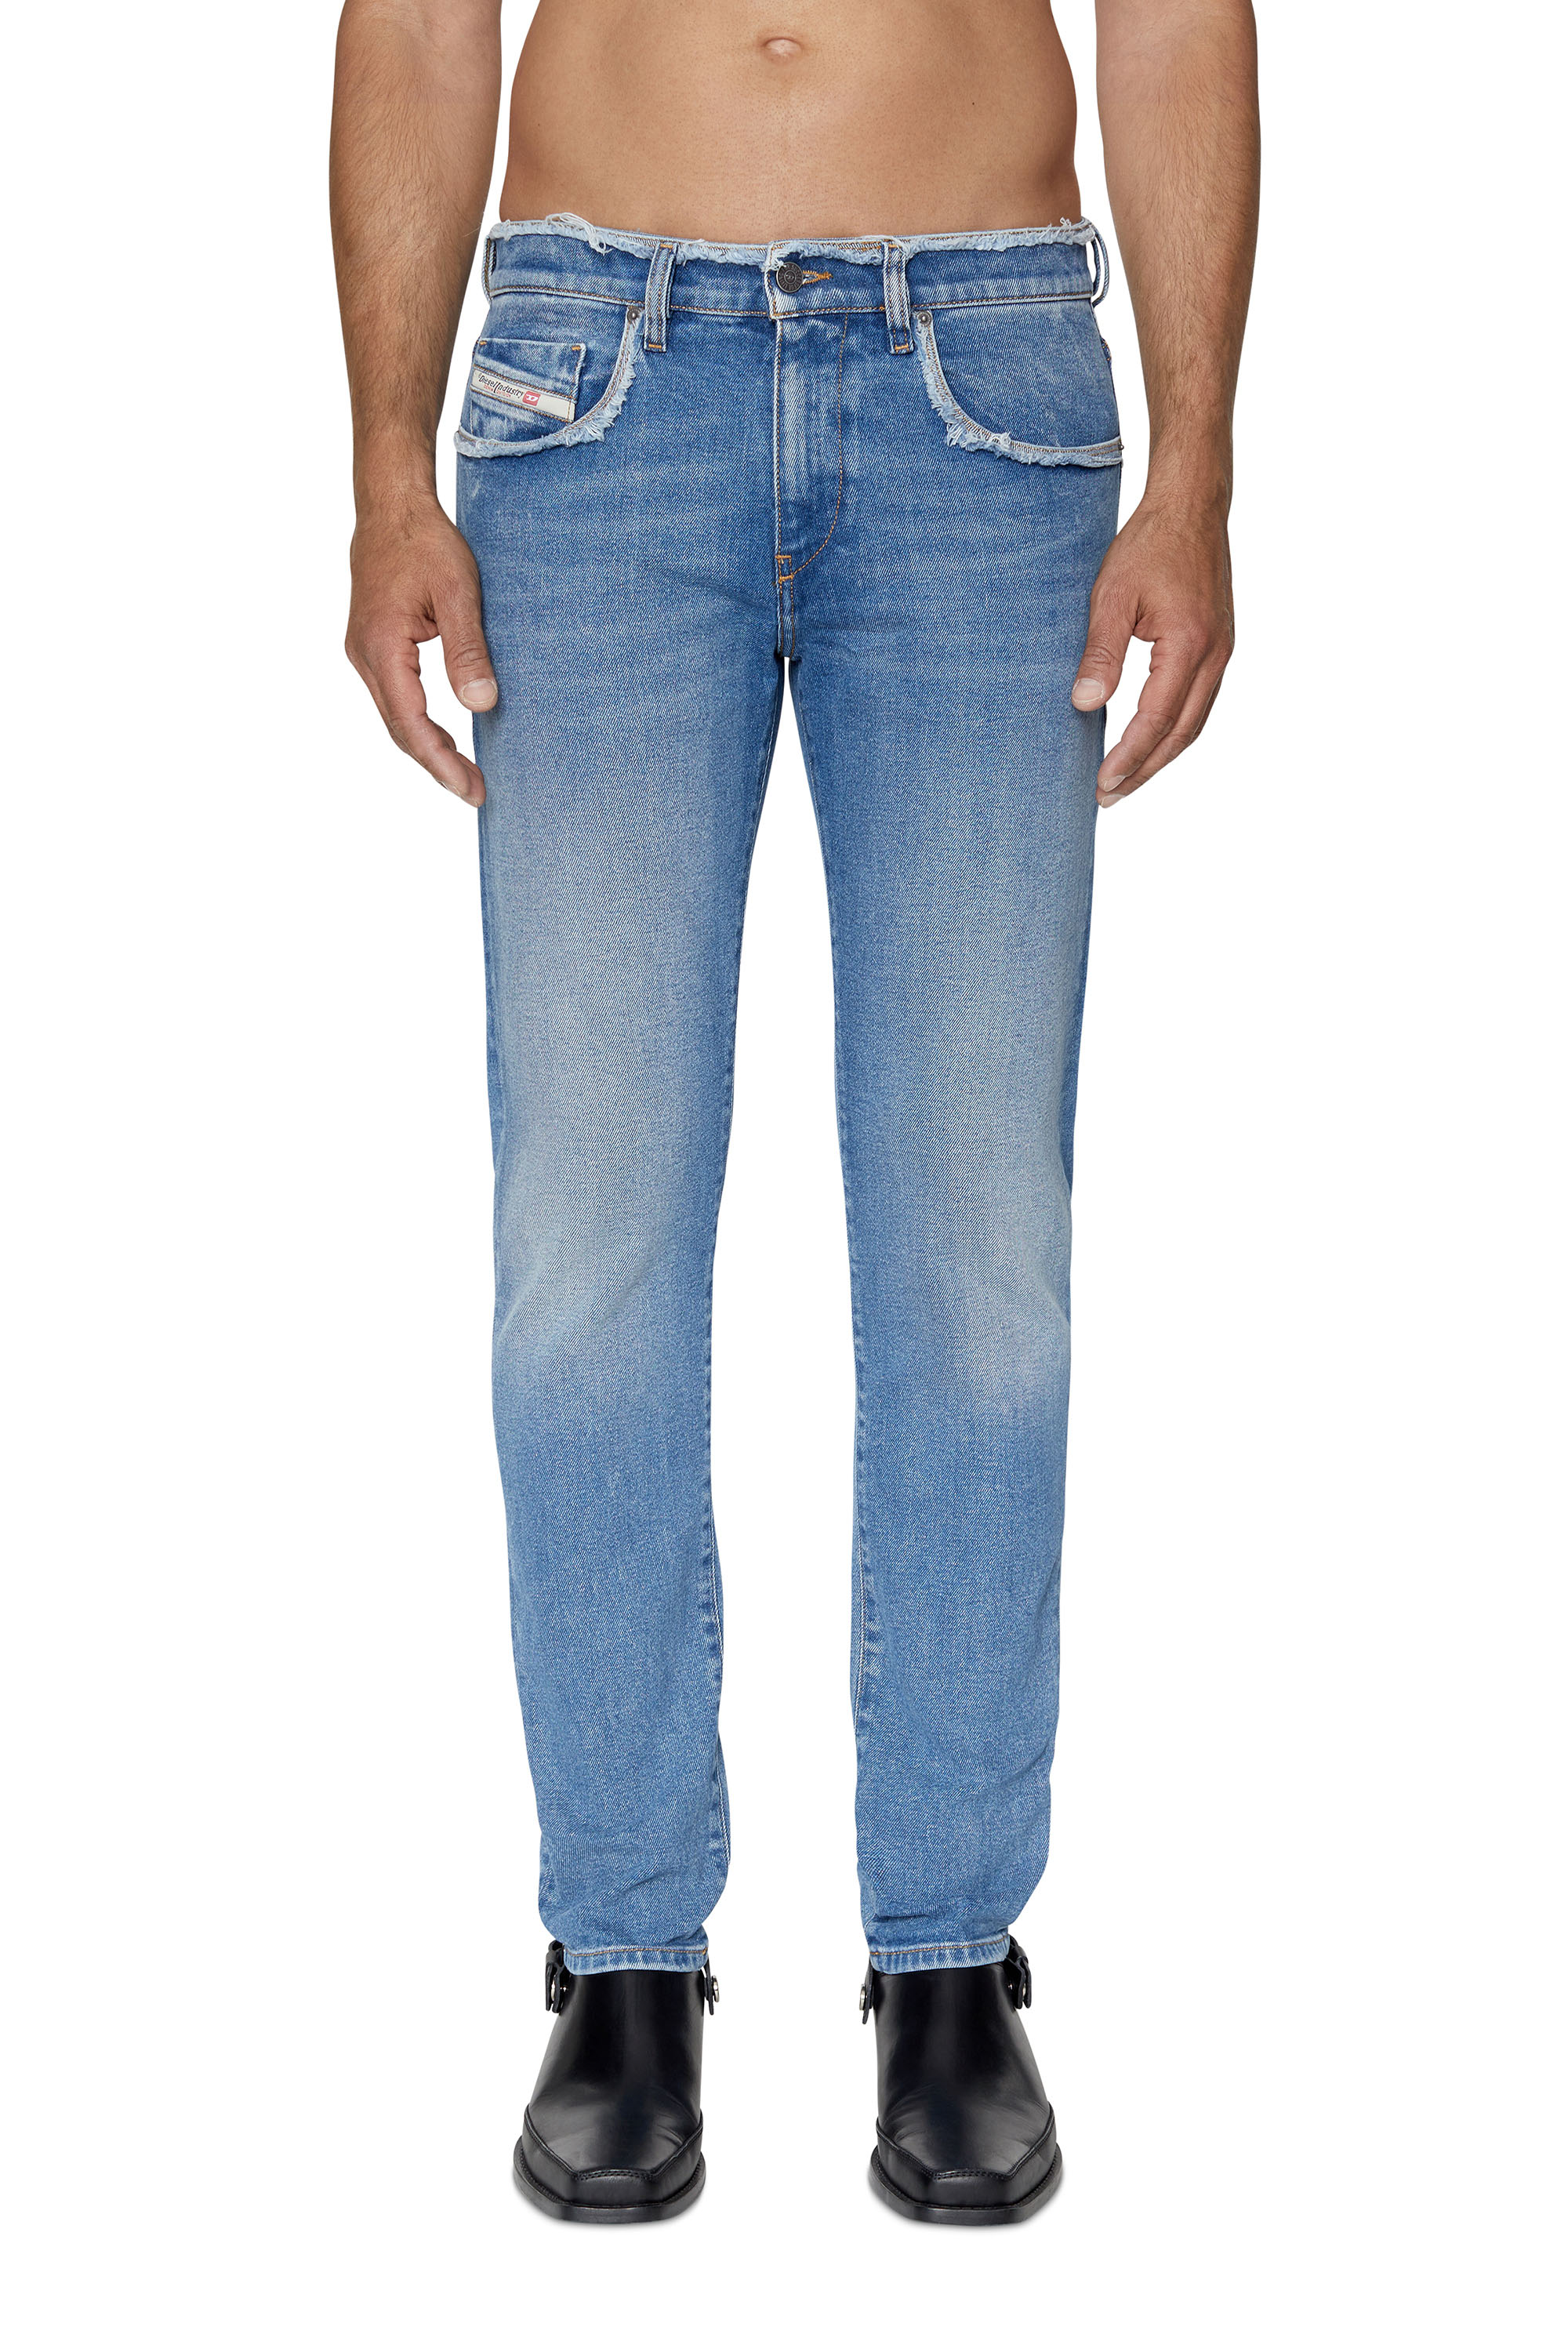 2019 D-STRUKT 09E19 Slim Jeans, Mittelblau - Jeans